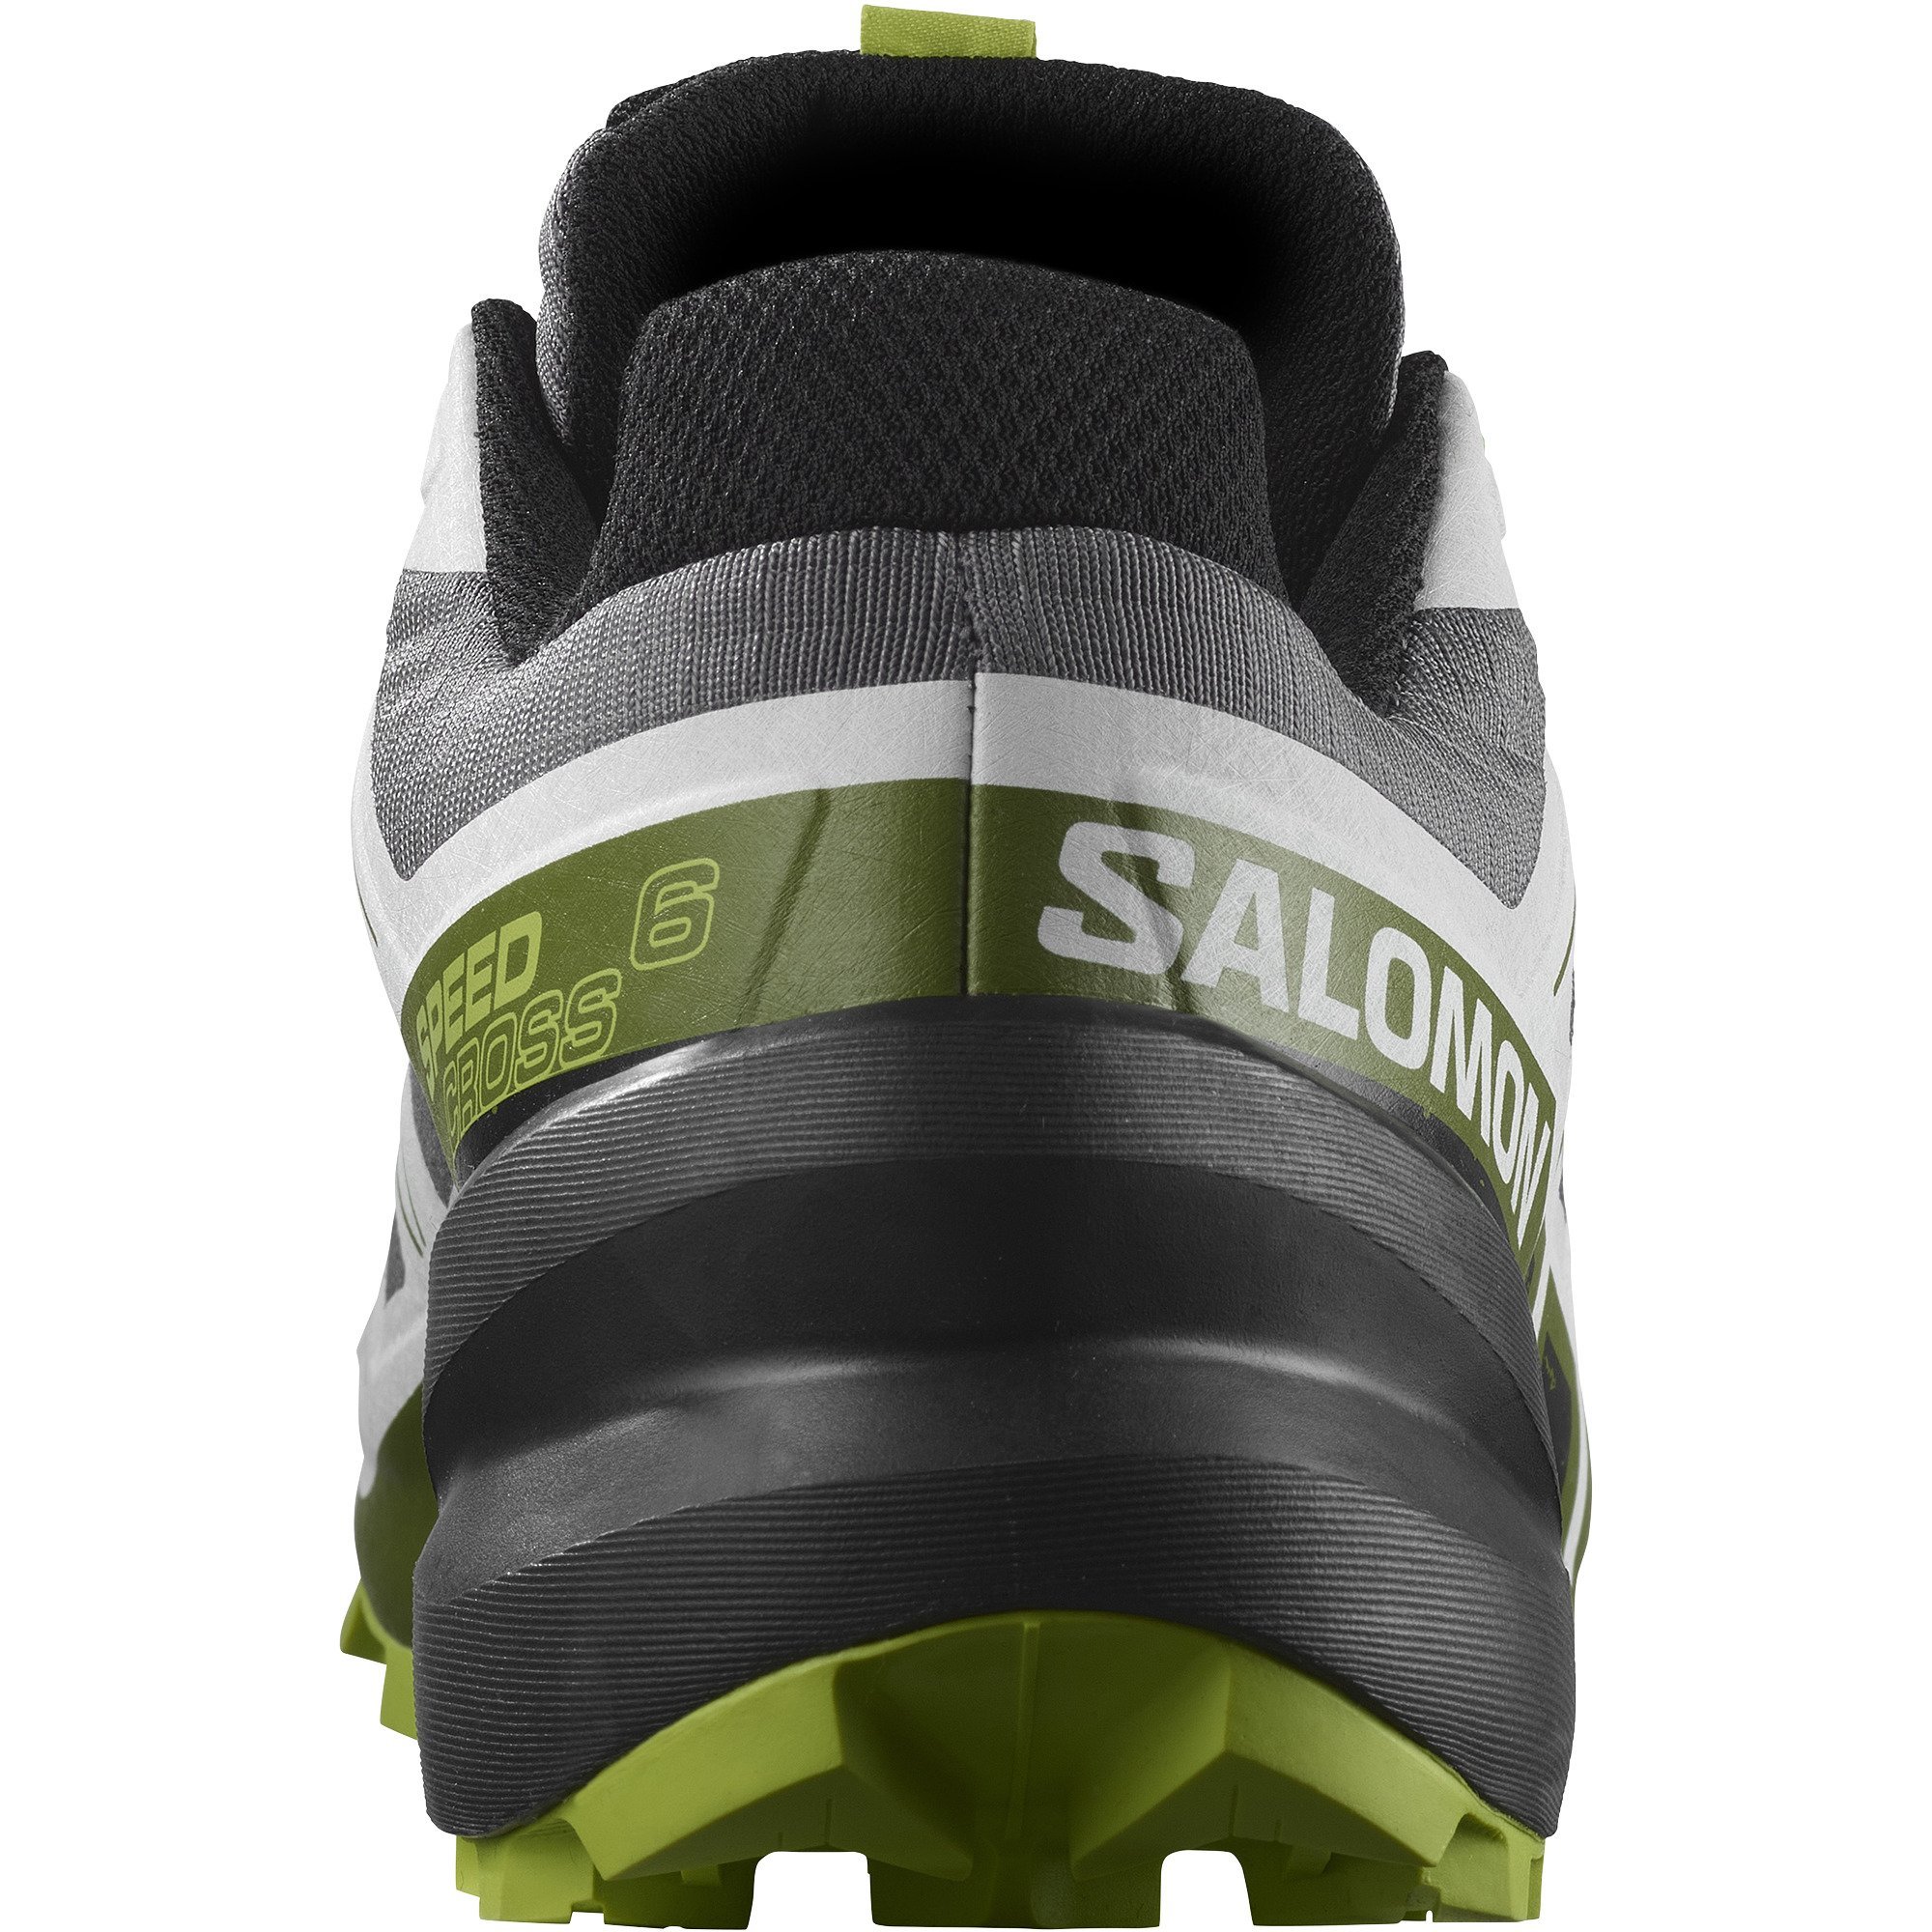 Obuv Salomon Speedcross 6 M - čierna/biela/zelená